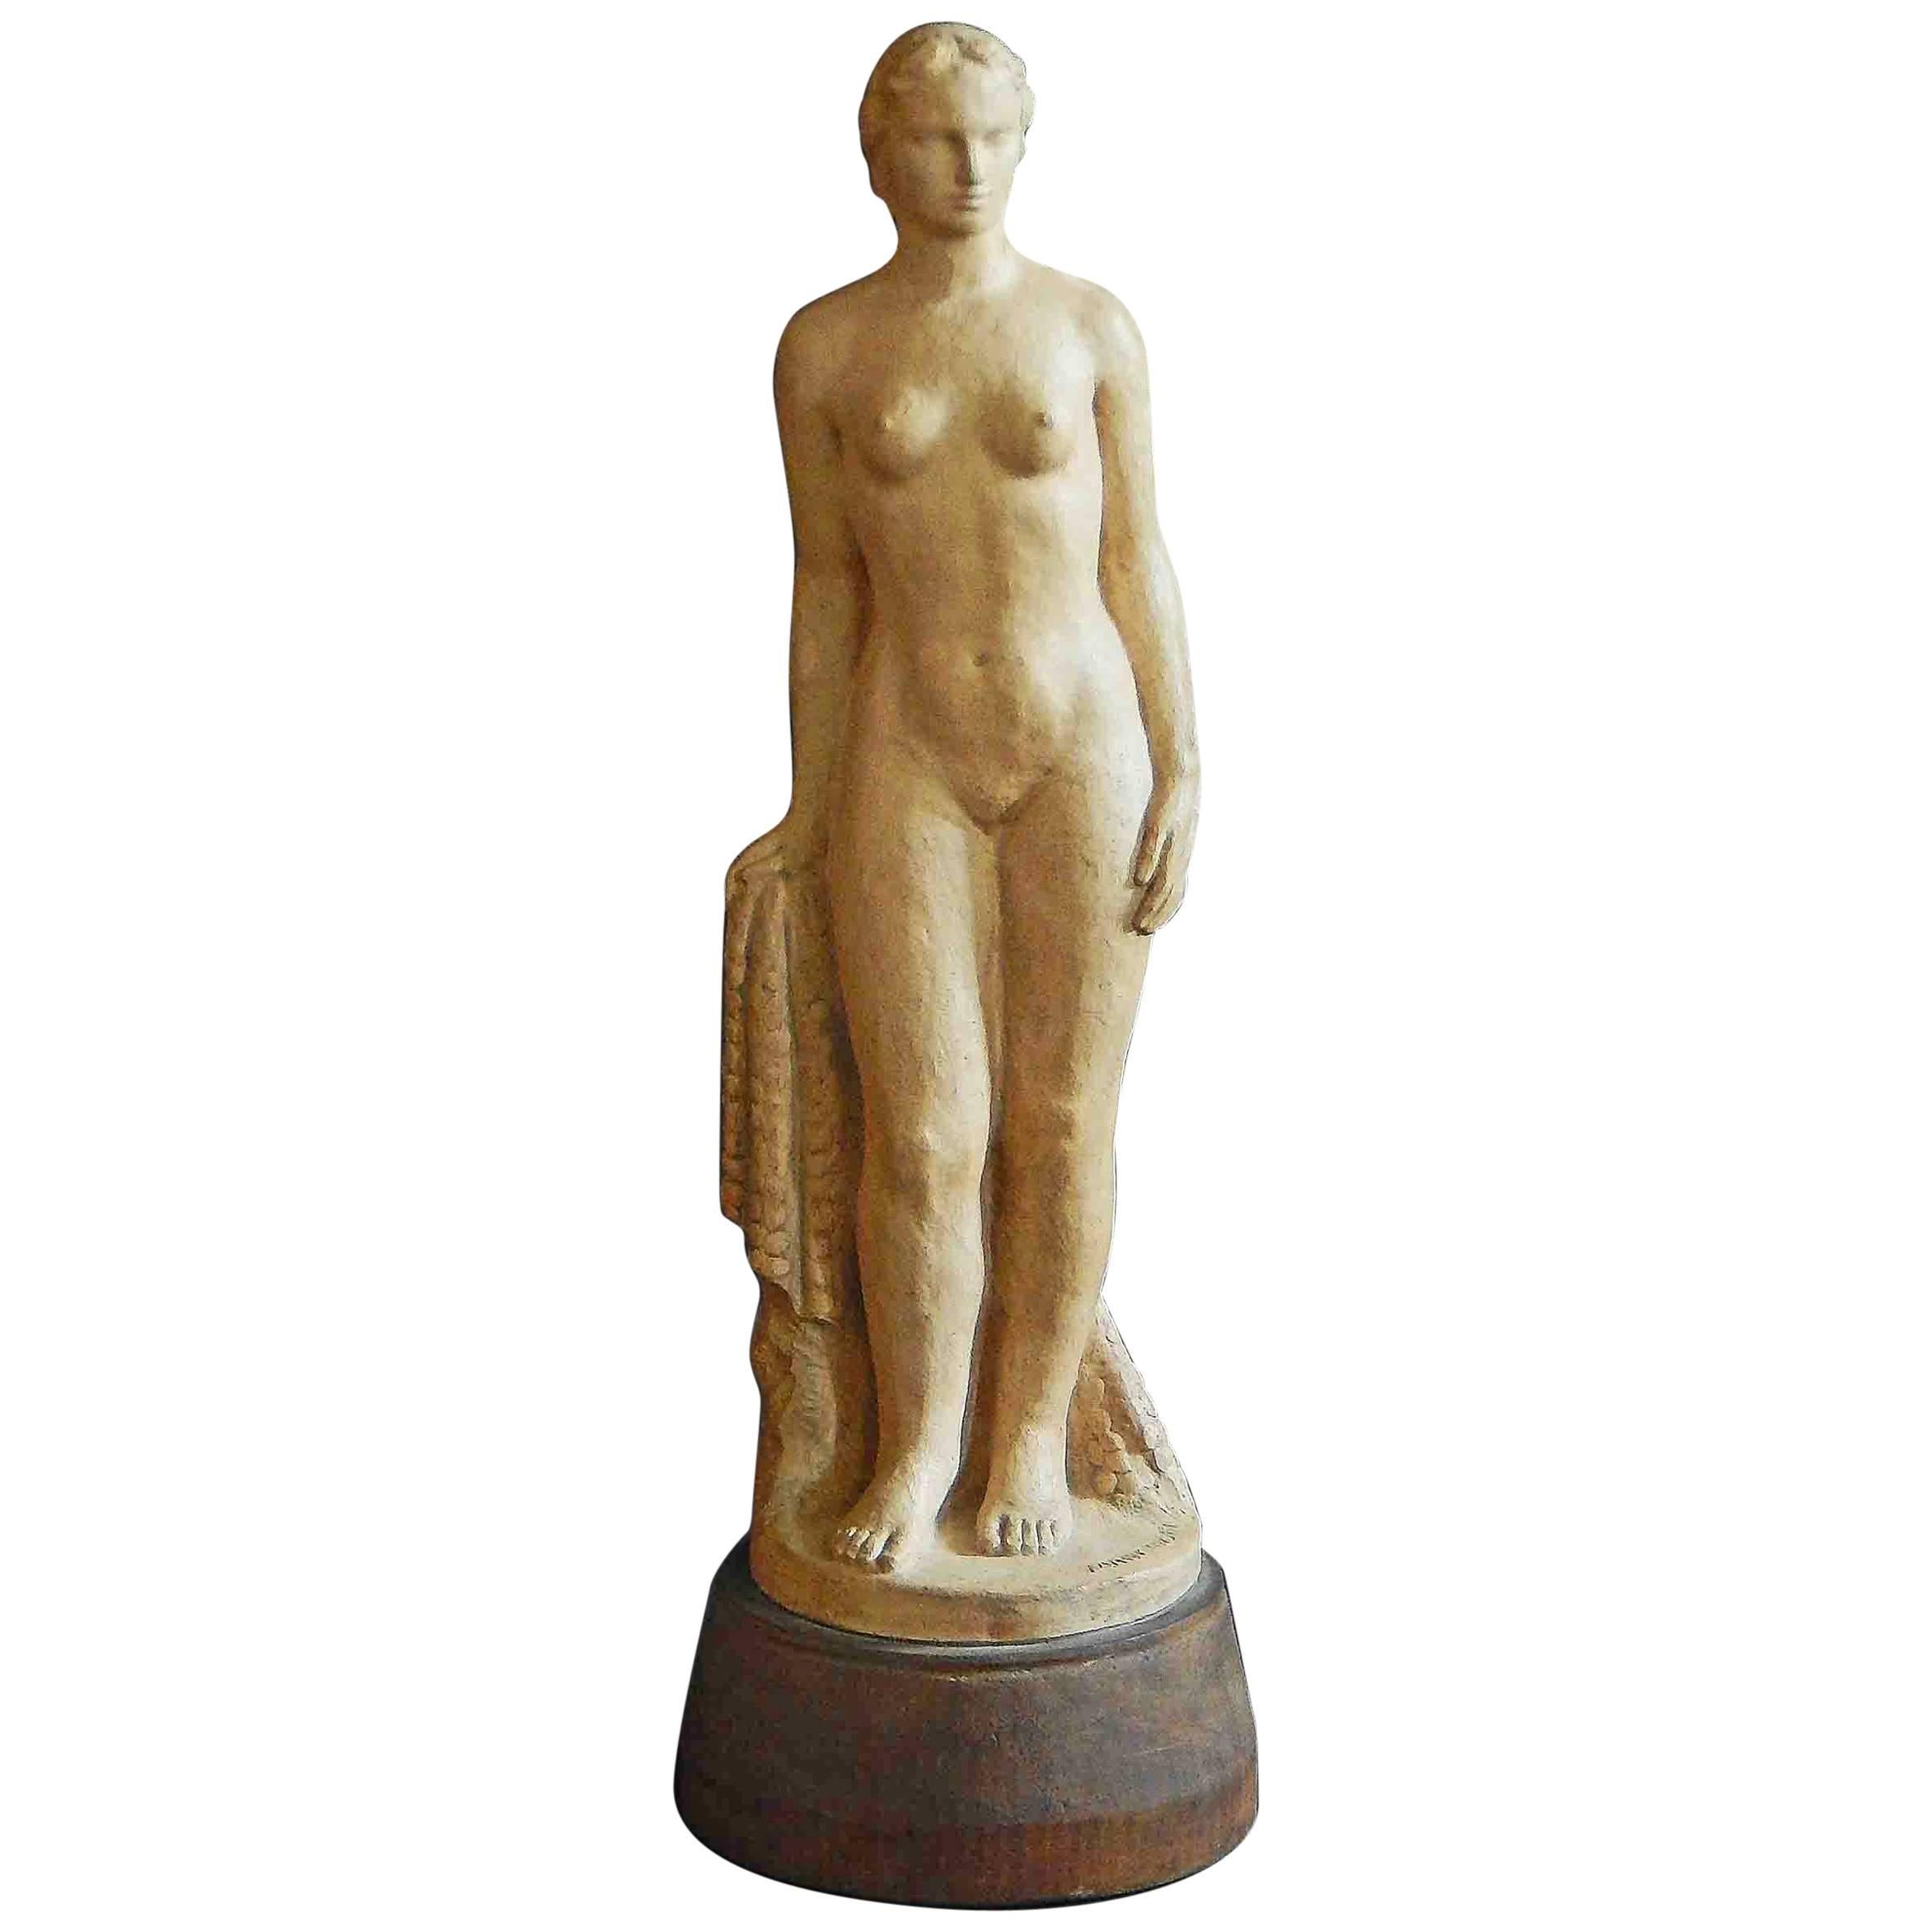 "Statuesque Female Nude, " Superb Art Deco Sculpture by Mankowski